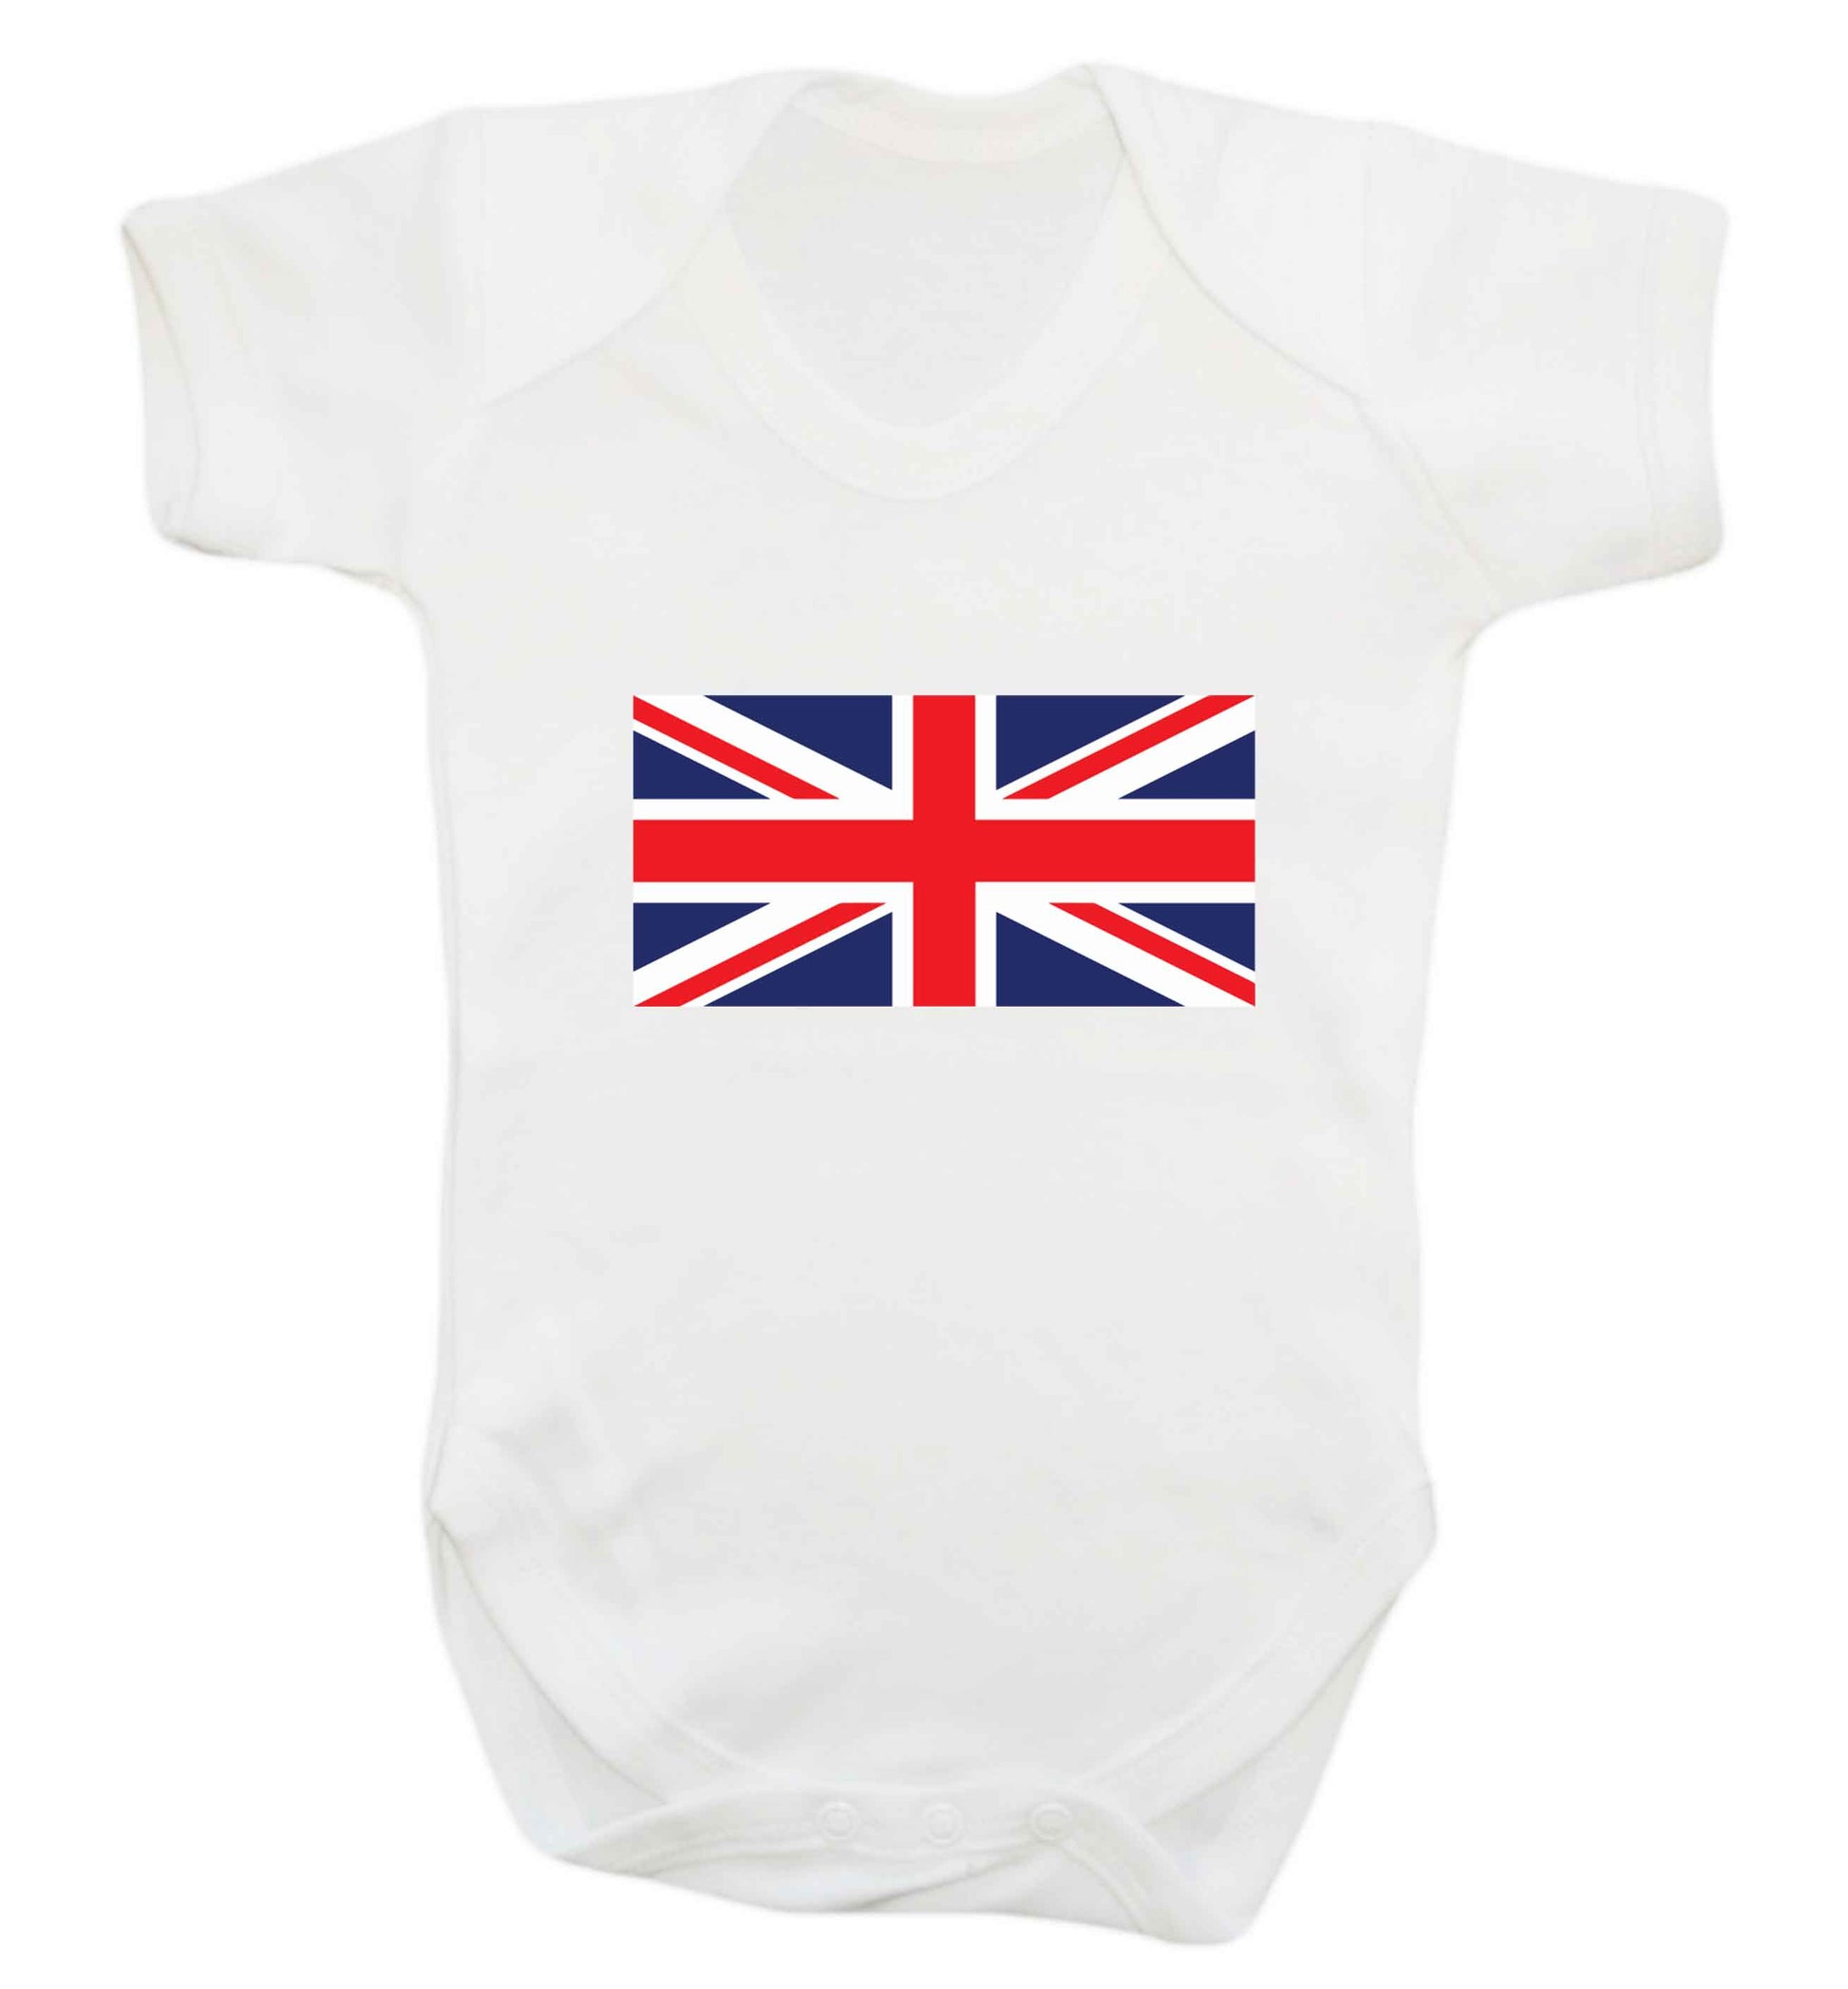 Union Jack baby vest white 18-24 months